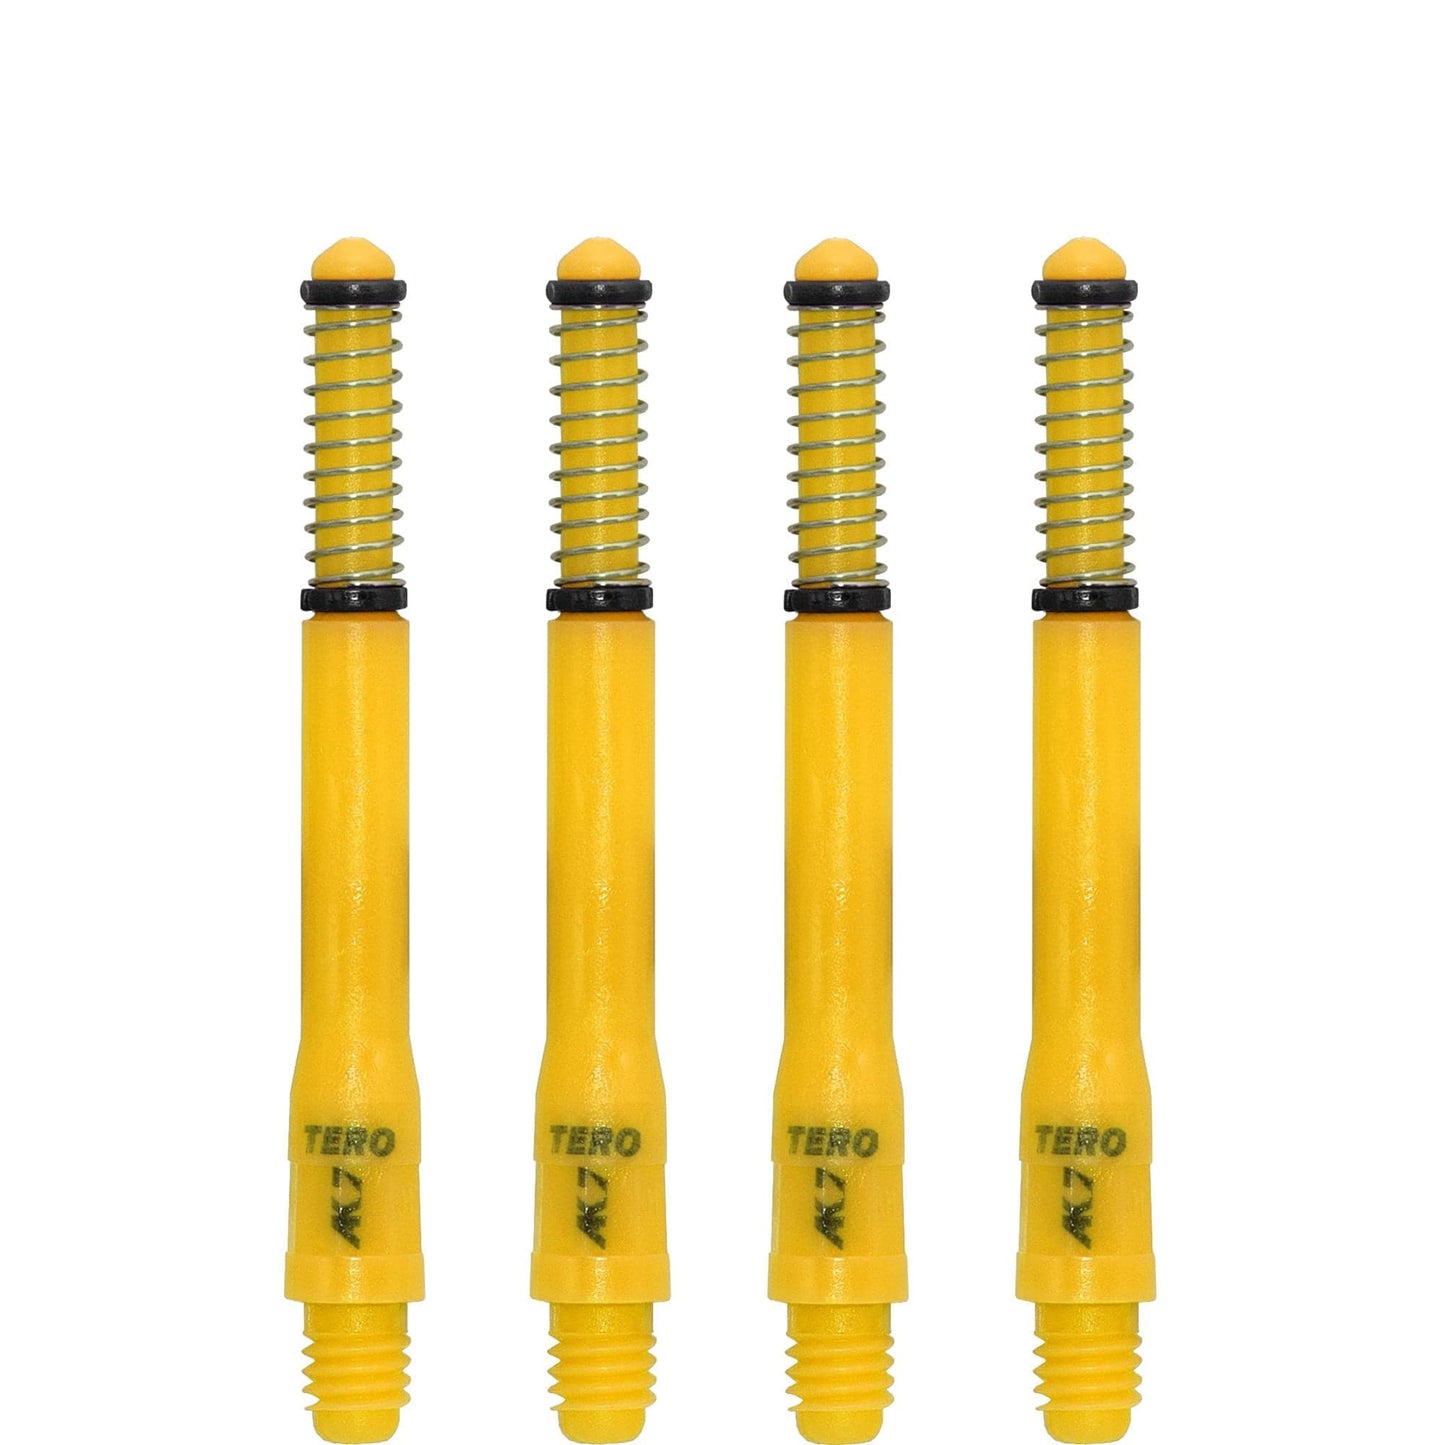 Cuesoul - Dart Shafts - Tero Flight System - AK7 - Standard - Set of 4 - Yellow Cuesoul 43.5mm